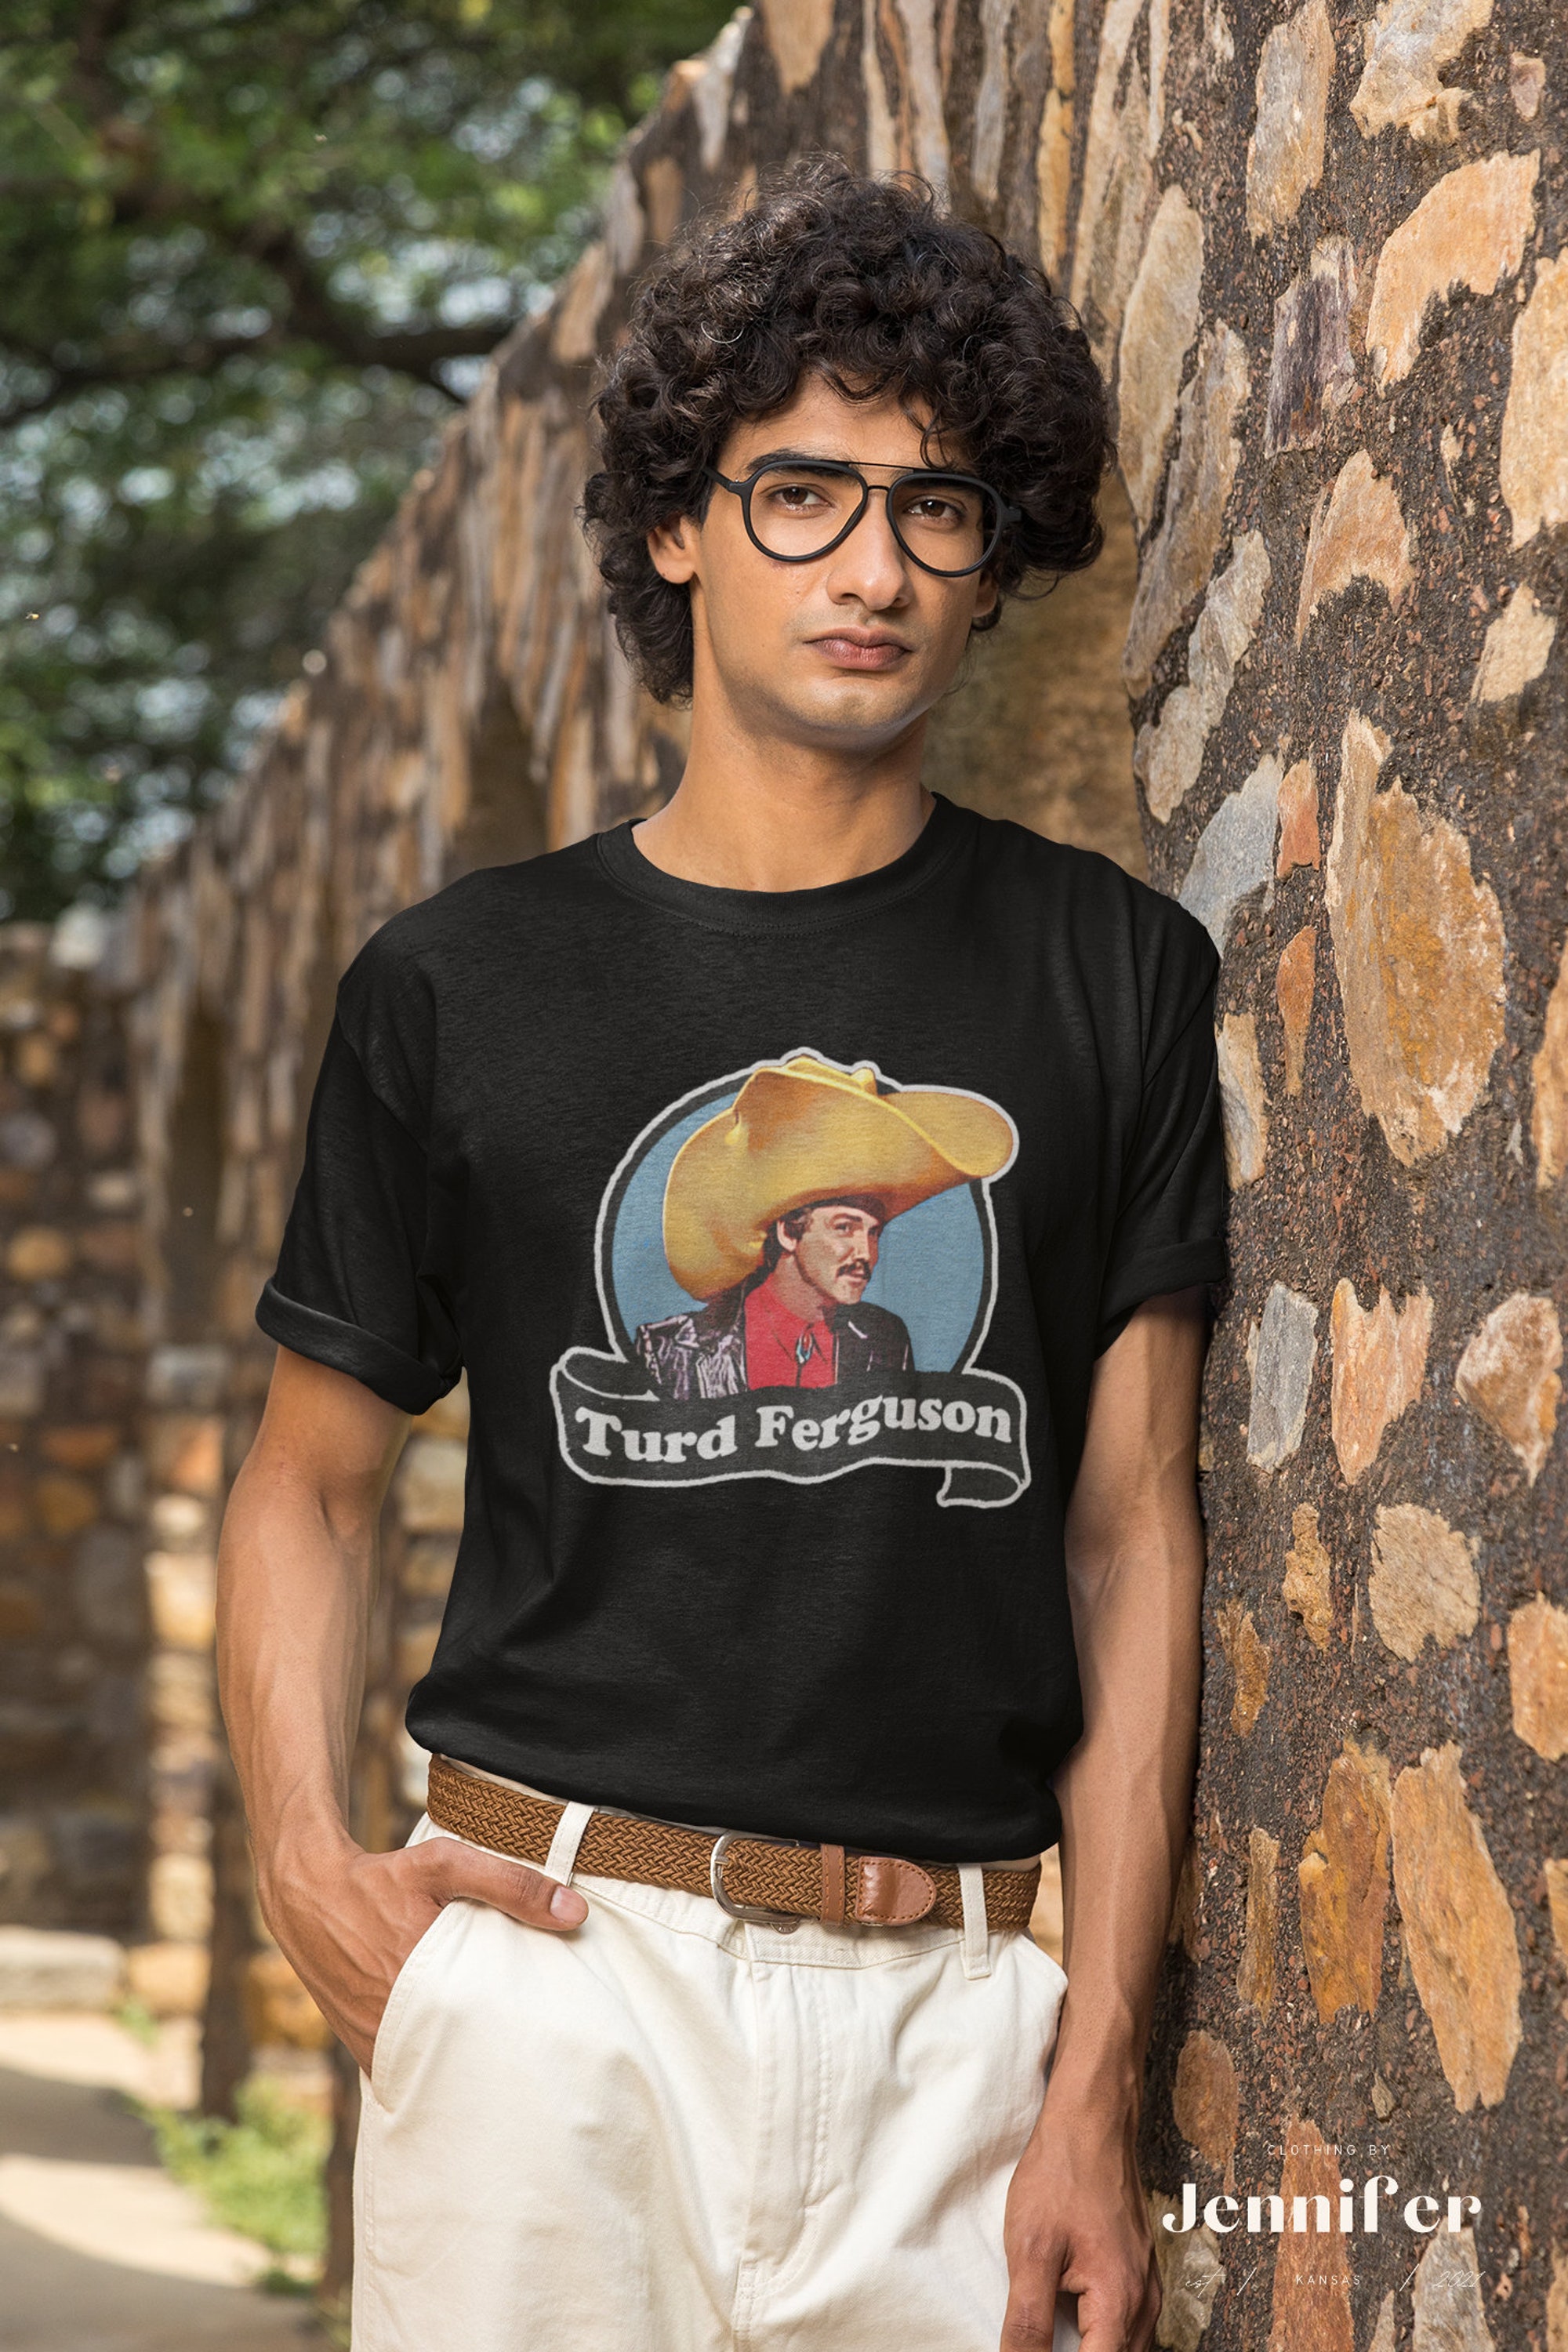 Discover Turd Ferguson Vintage T-Shirt, Norm Macdonald Shirt, Comedian Shirt, Saturday Night Live Show Shirt